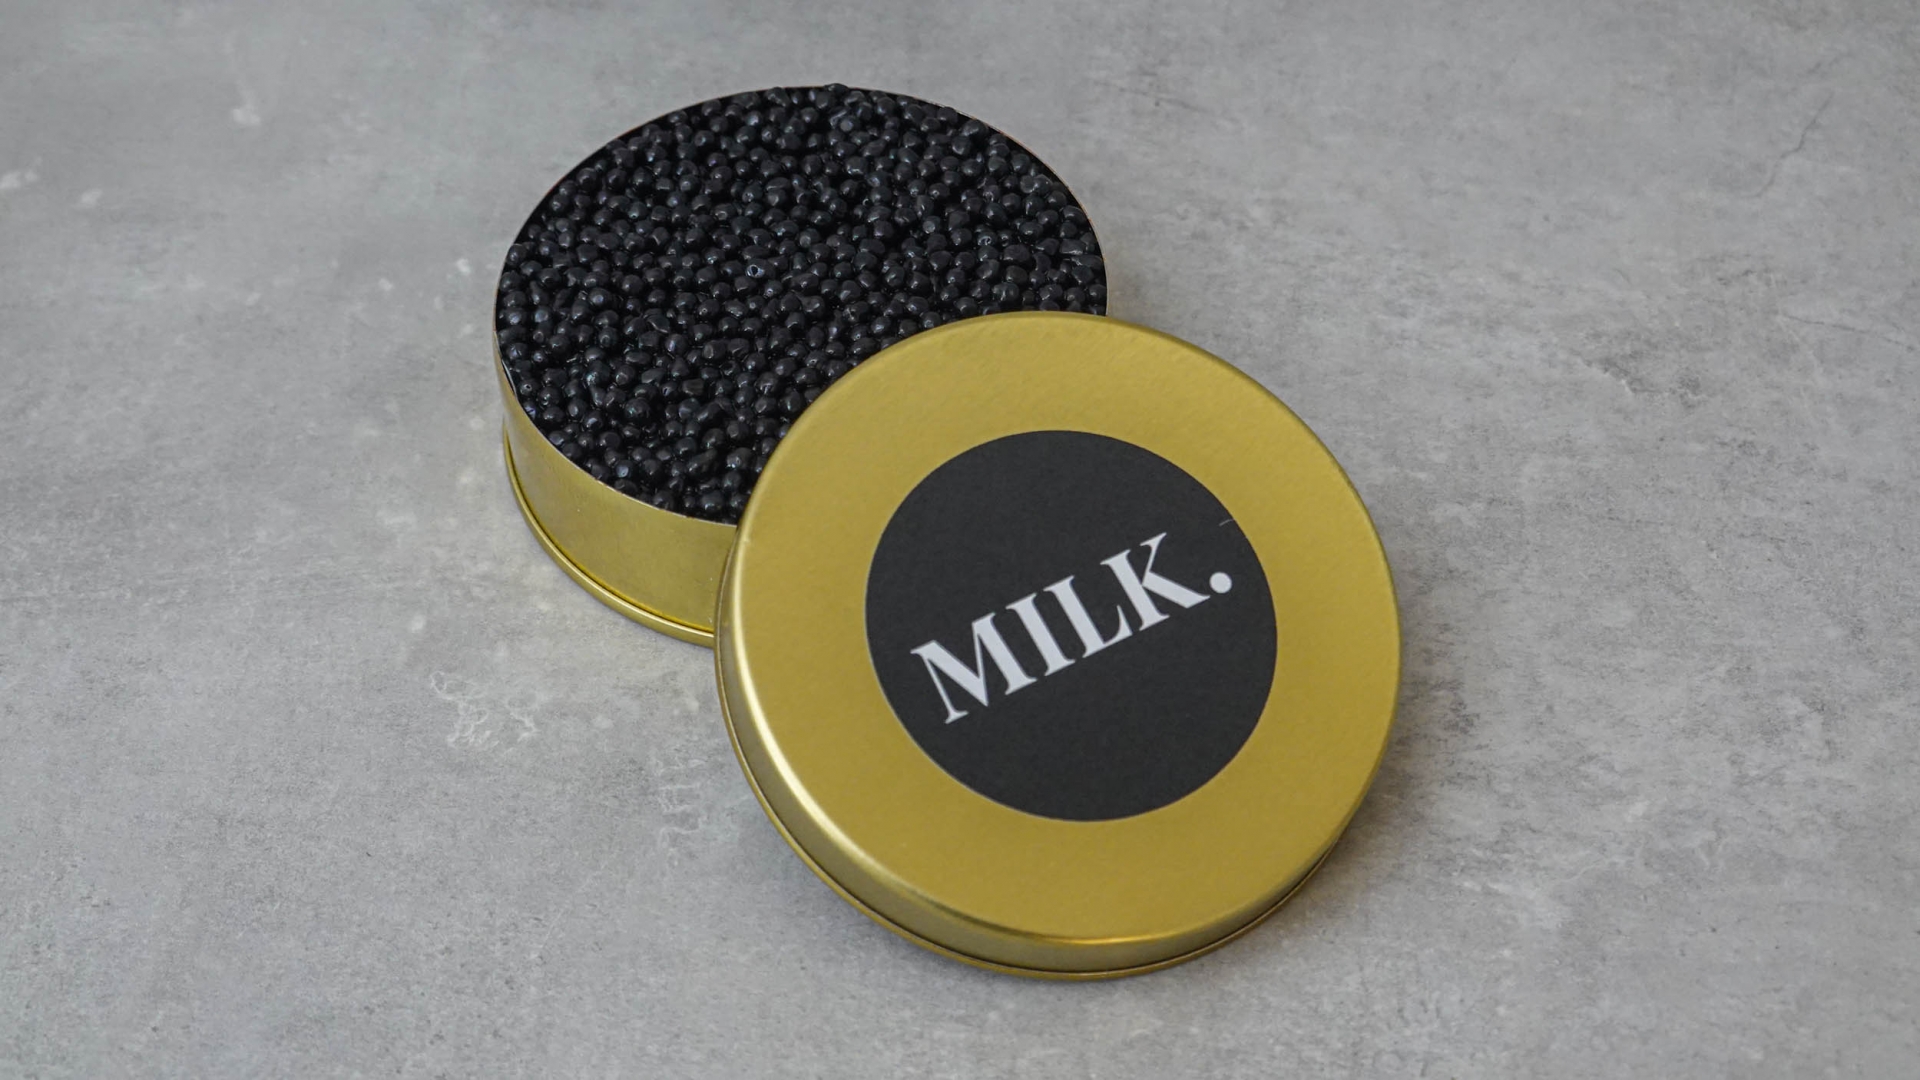 Our vegan caviar in a classic aluminum can with black MILK. sticker.